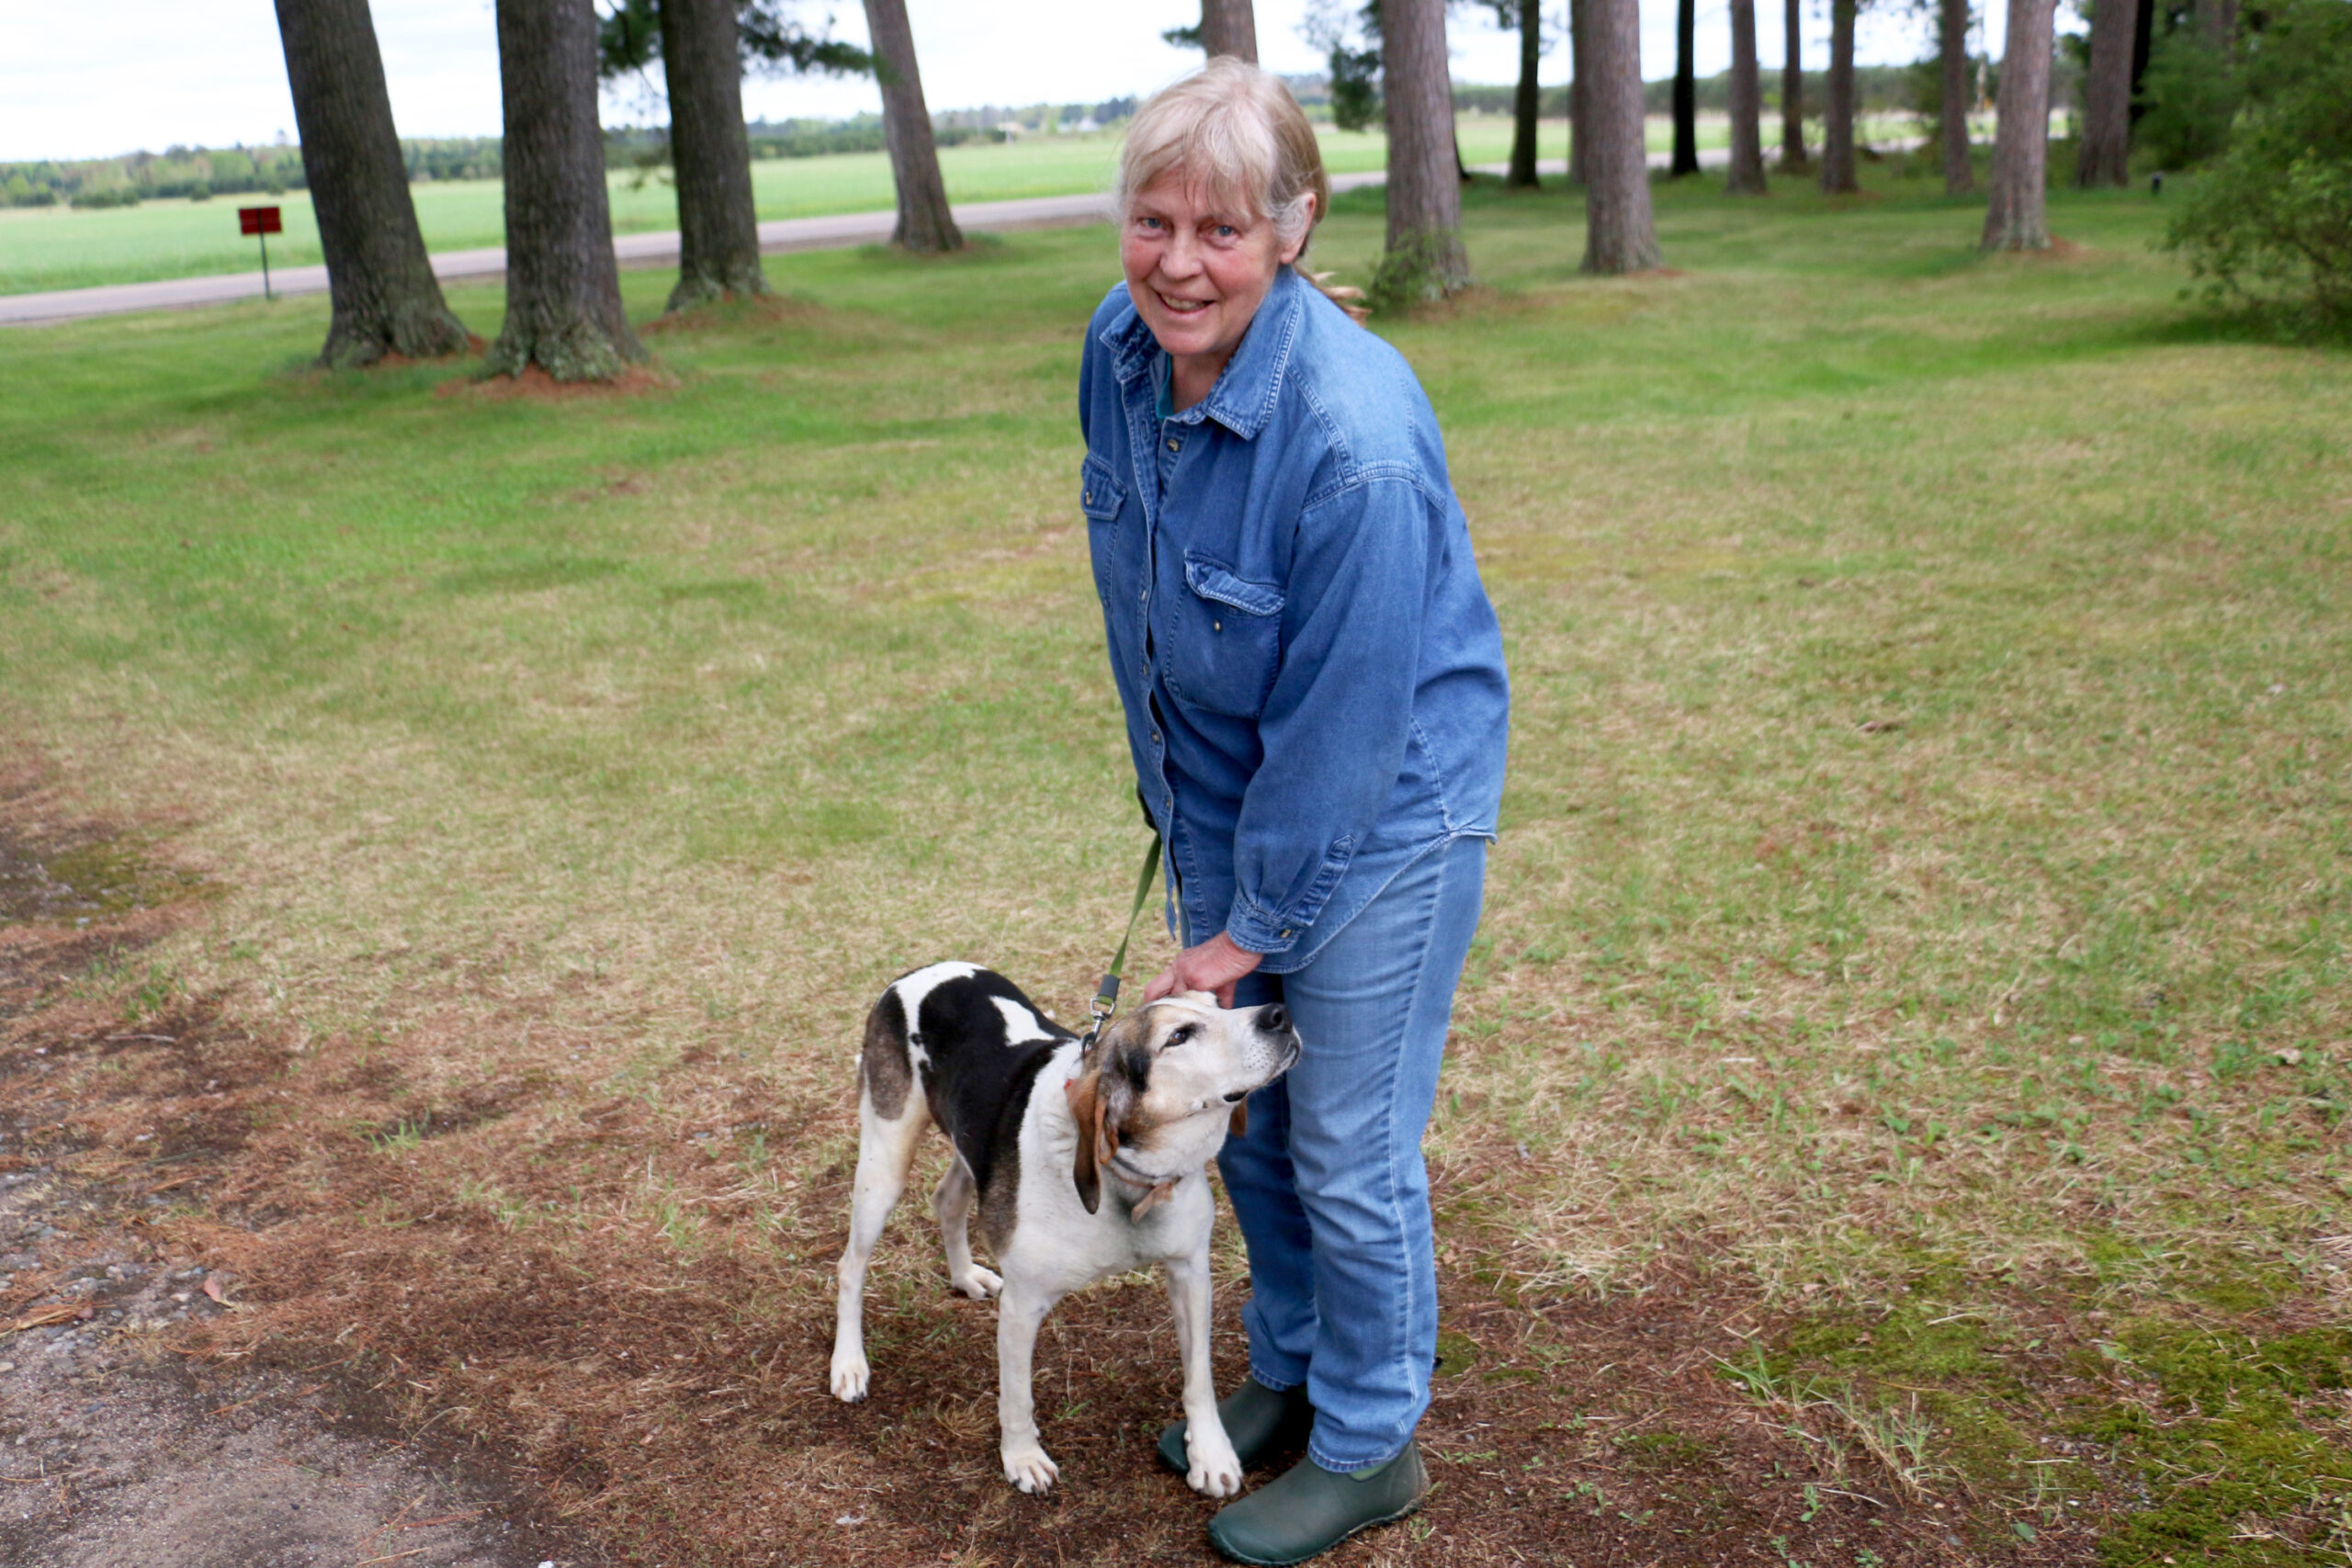 Laurie Groskopf is seen with her dog